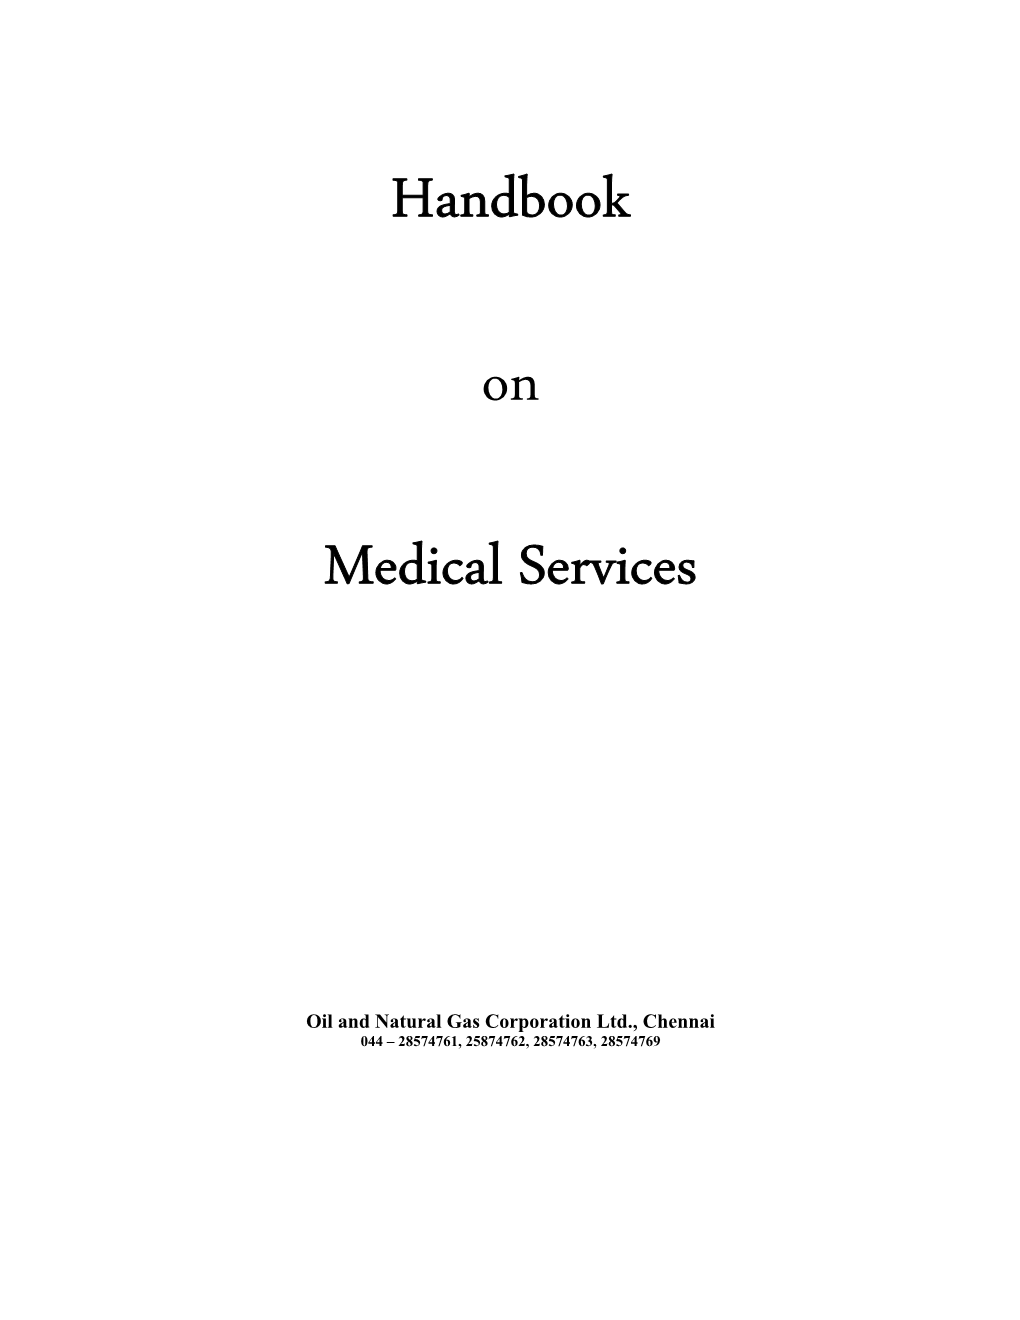 Handbook on Medical Services